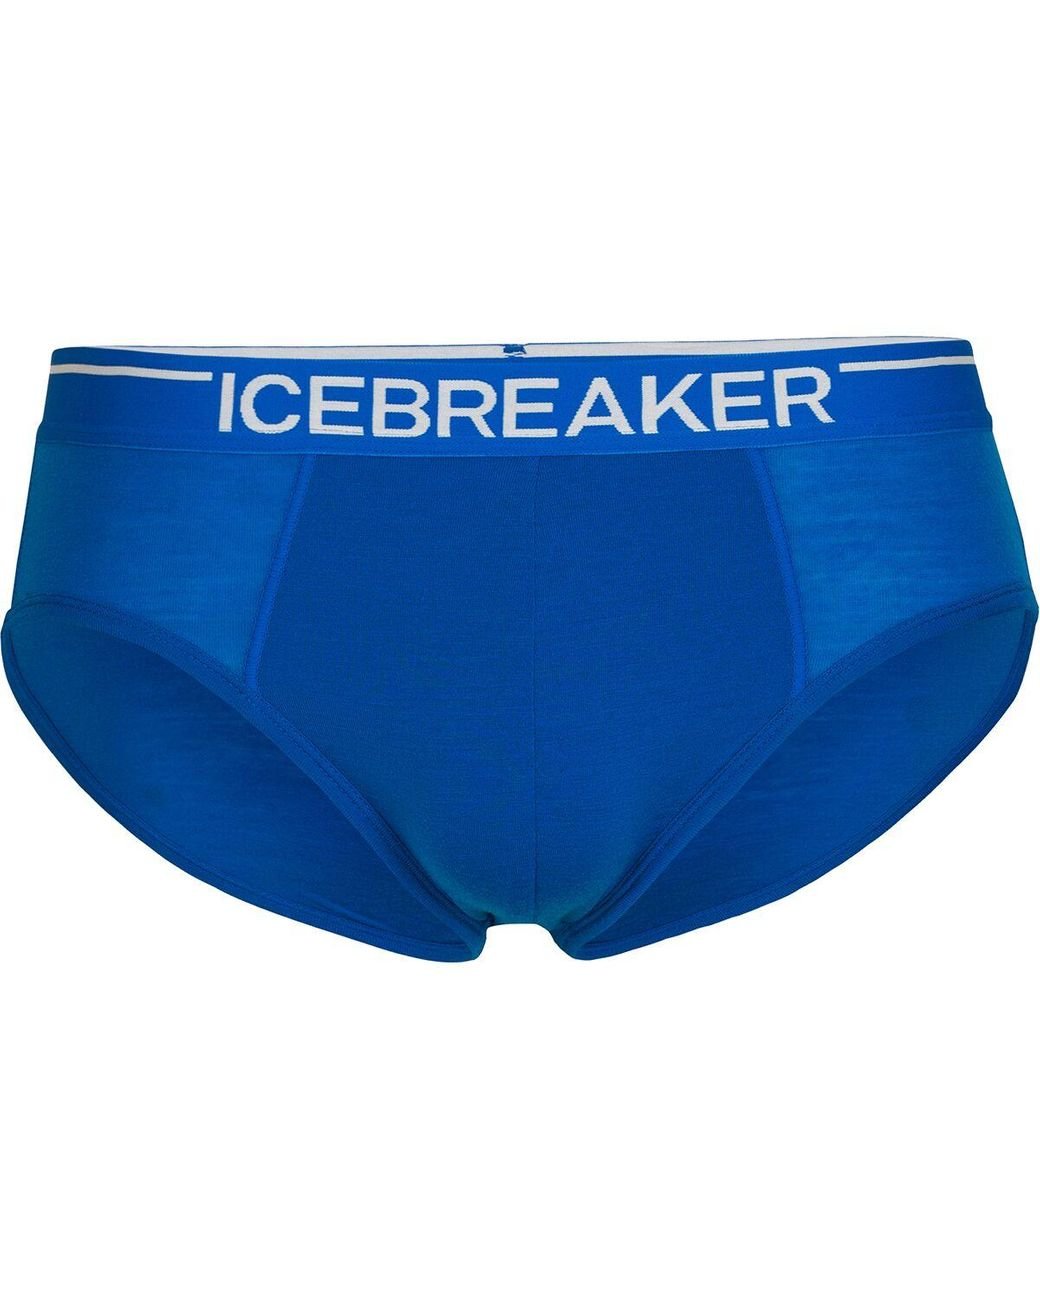 Icebreaker Bodyfit 150-ultralite Anatomica Brief in Blue for Men